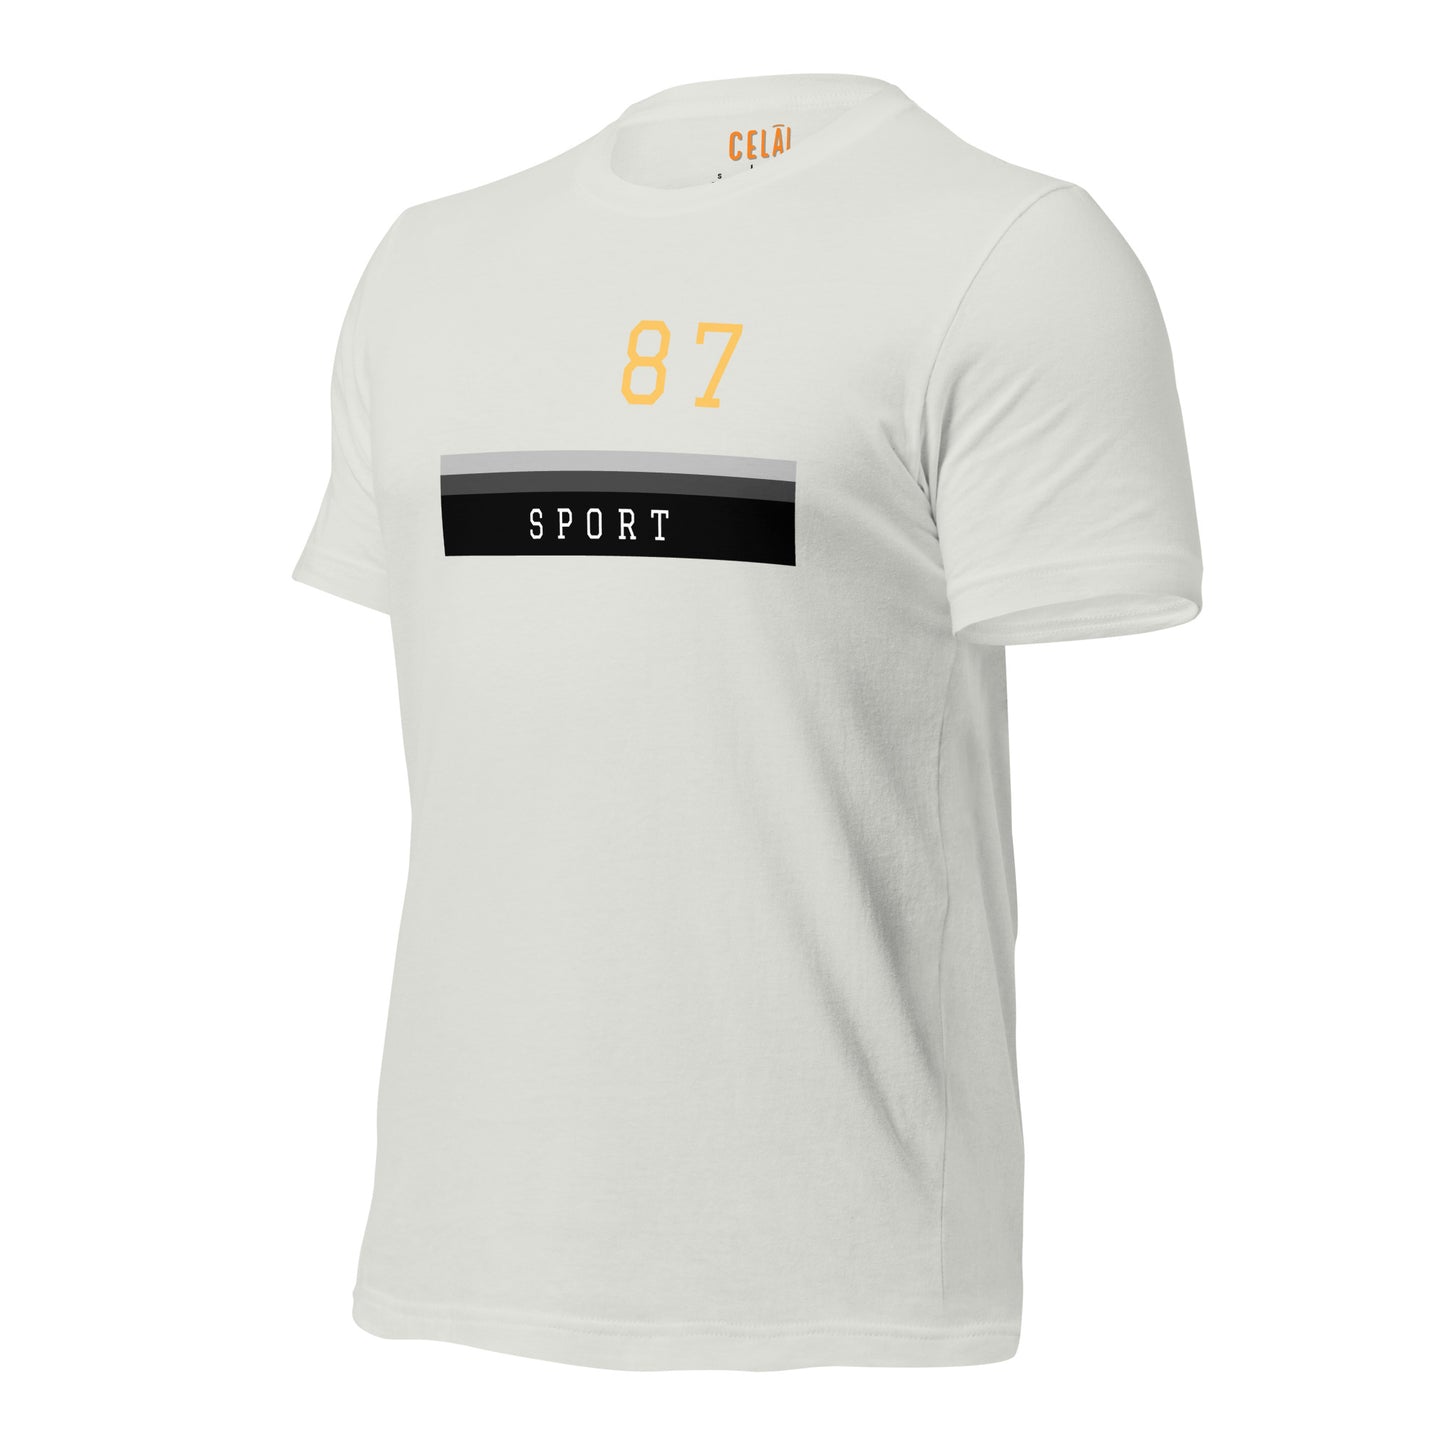 87 Unisex t-shirt